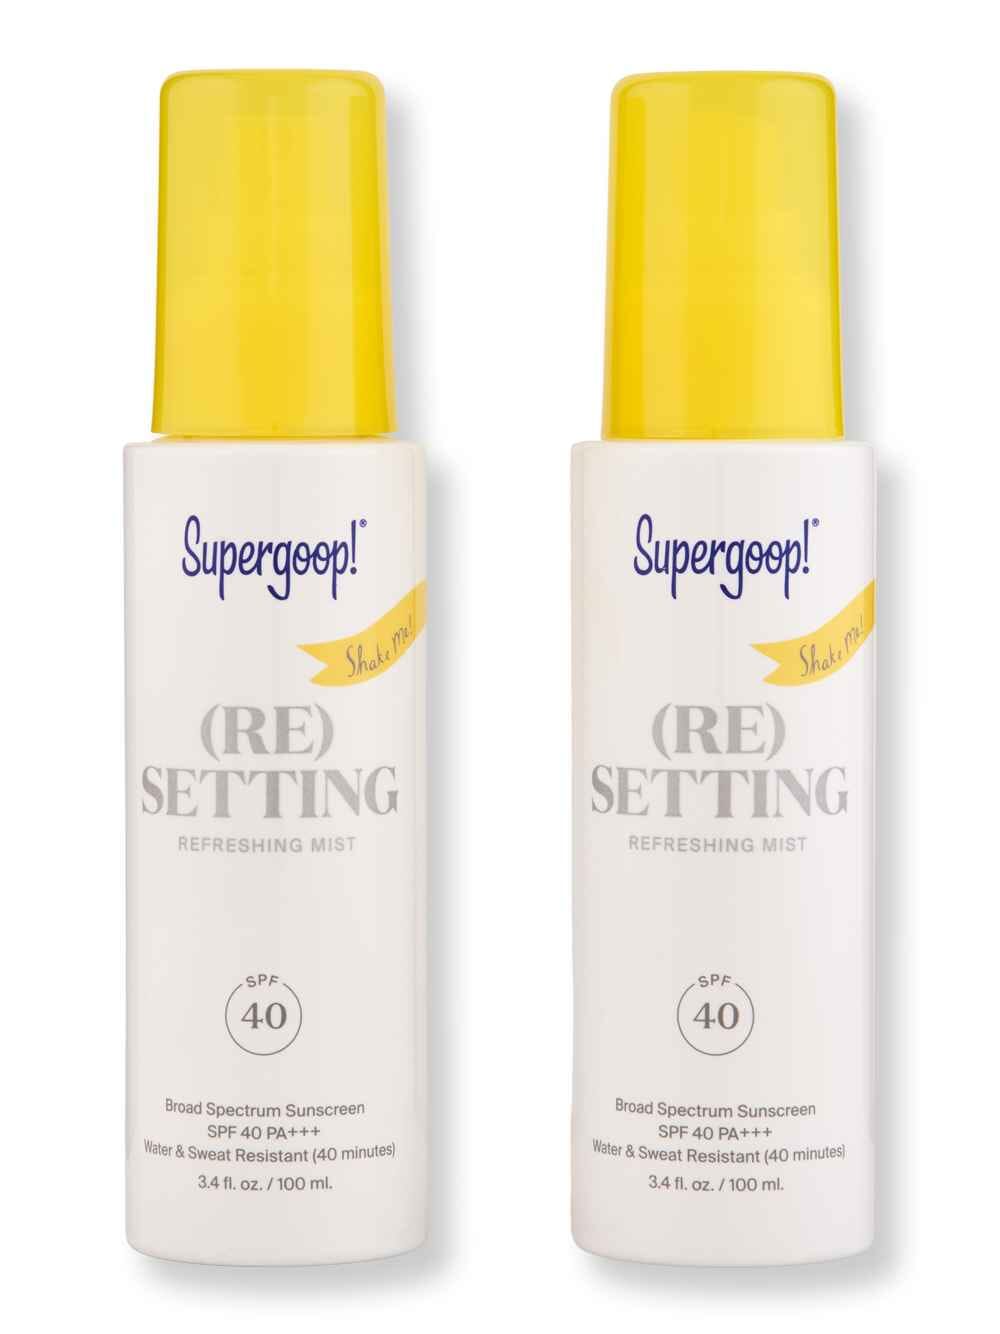 Supergoop Supergoop Resetting Refreshing Mist SPF 40 2 Ct 3.4 oz Body Sunscreens 